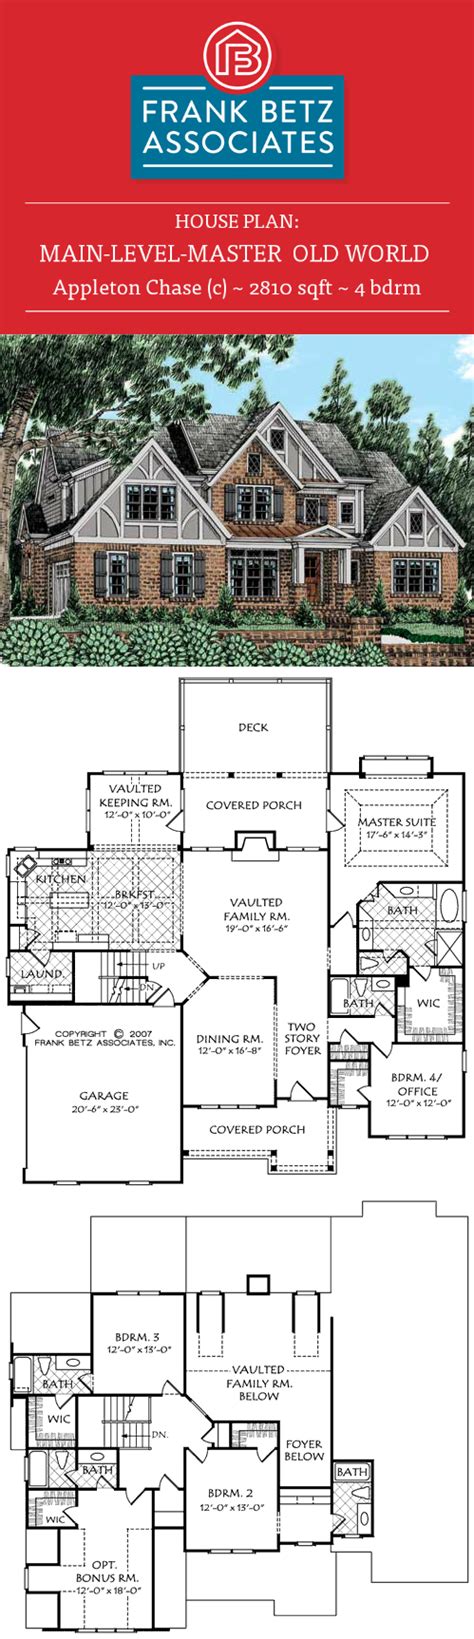 Appleton Chase C 2810 Sqft 4 Bdrm House Plan Design By Frank Betz